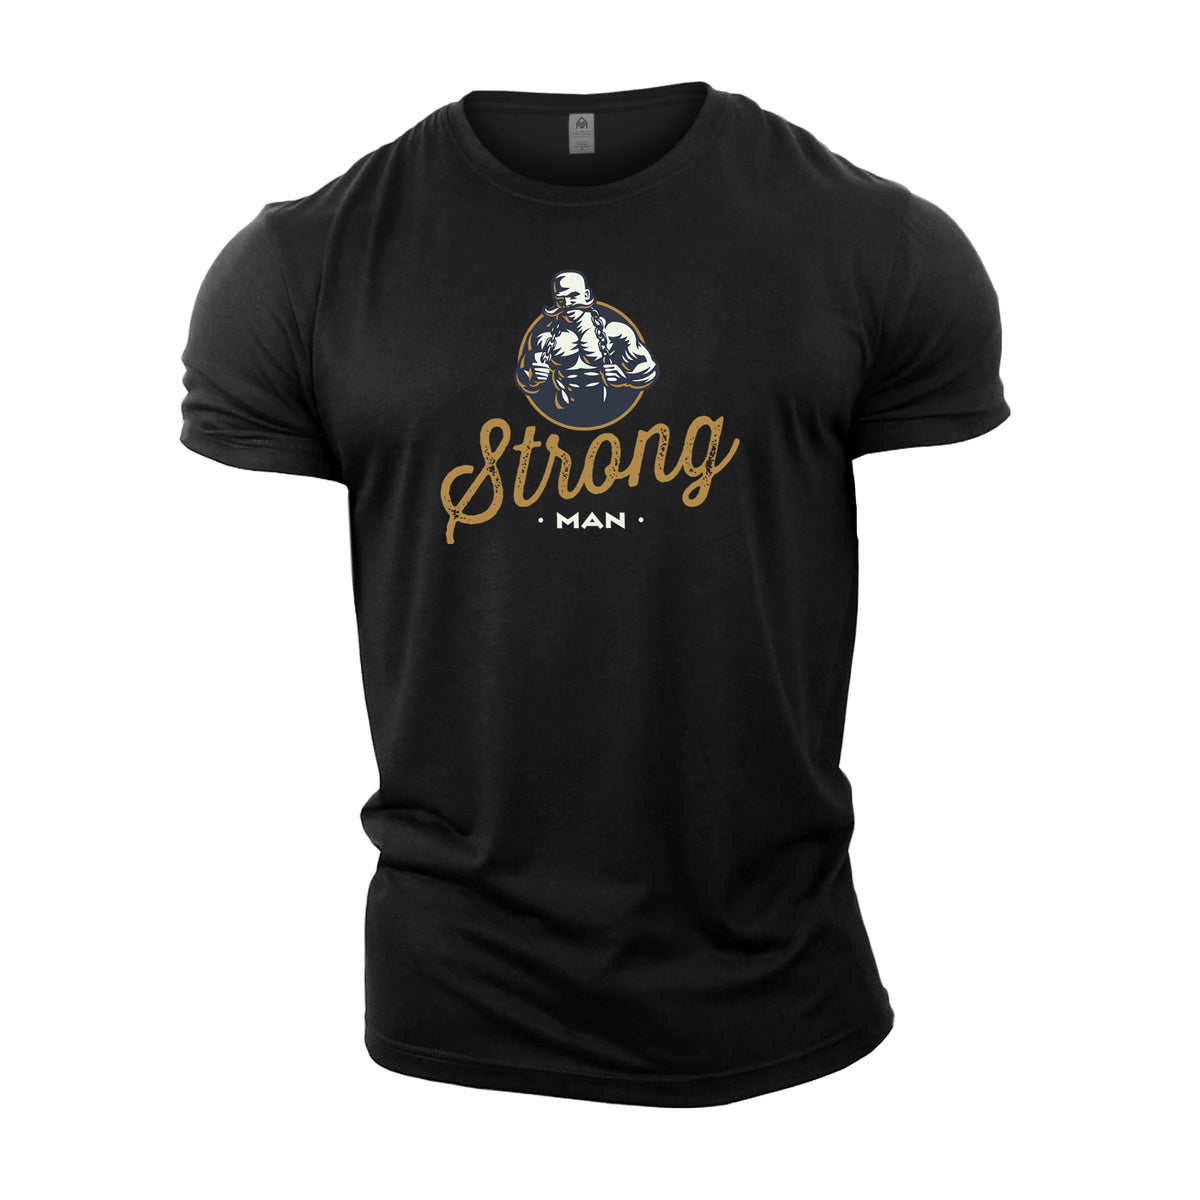 Strong Man - Gym T-Shirt